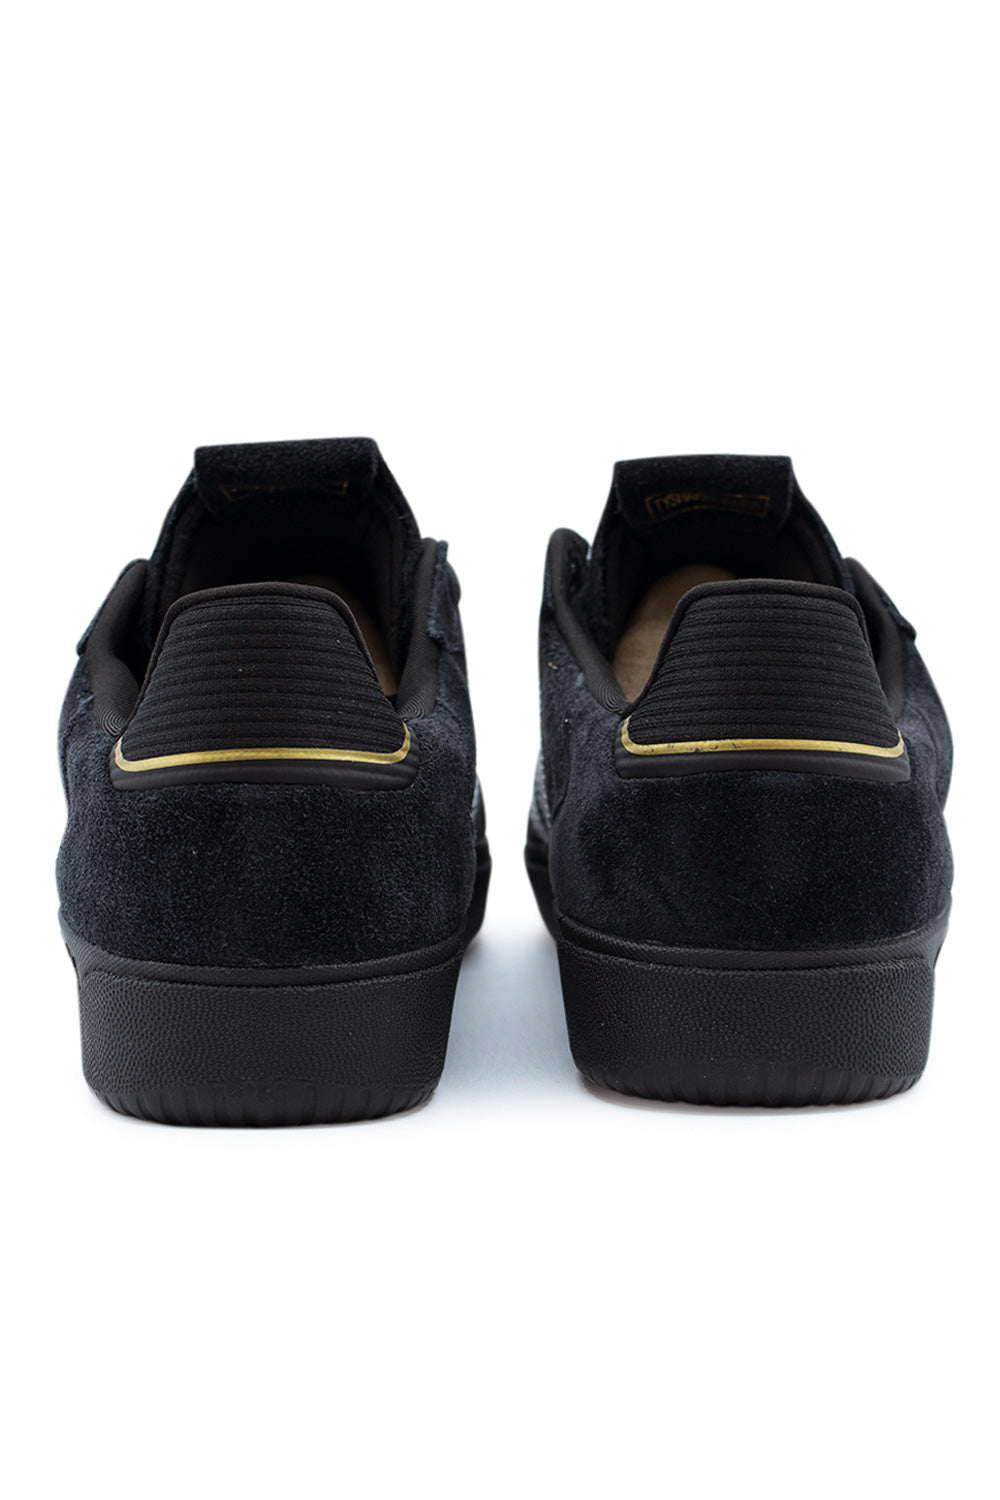 Adidas Tyshawn Low Shoe Core Black / Cloud White / Gold Metallic - BONKERS